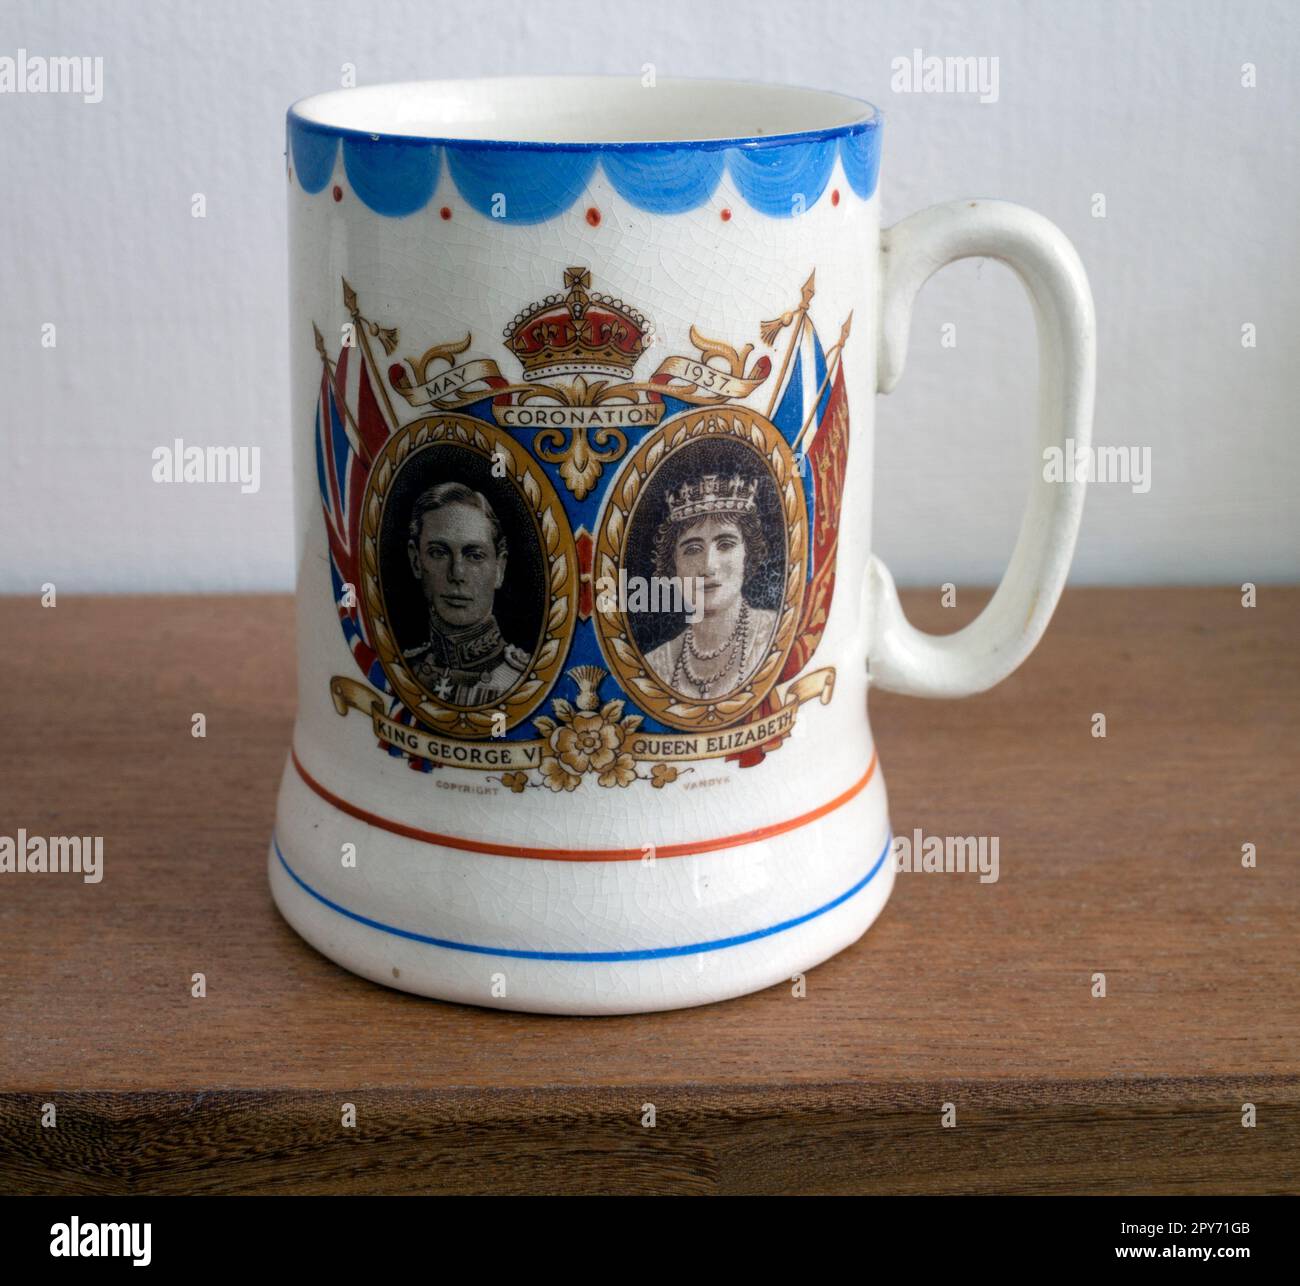 King George VI Coronation mug Stock Photo